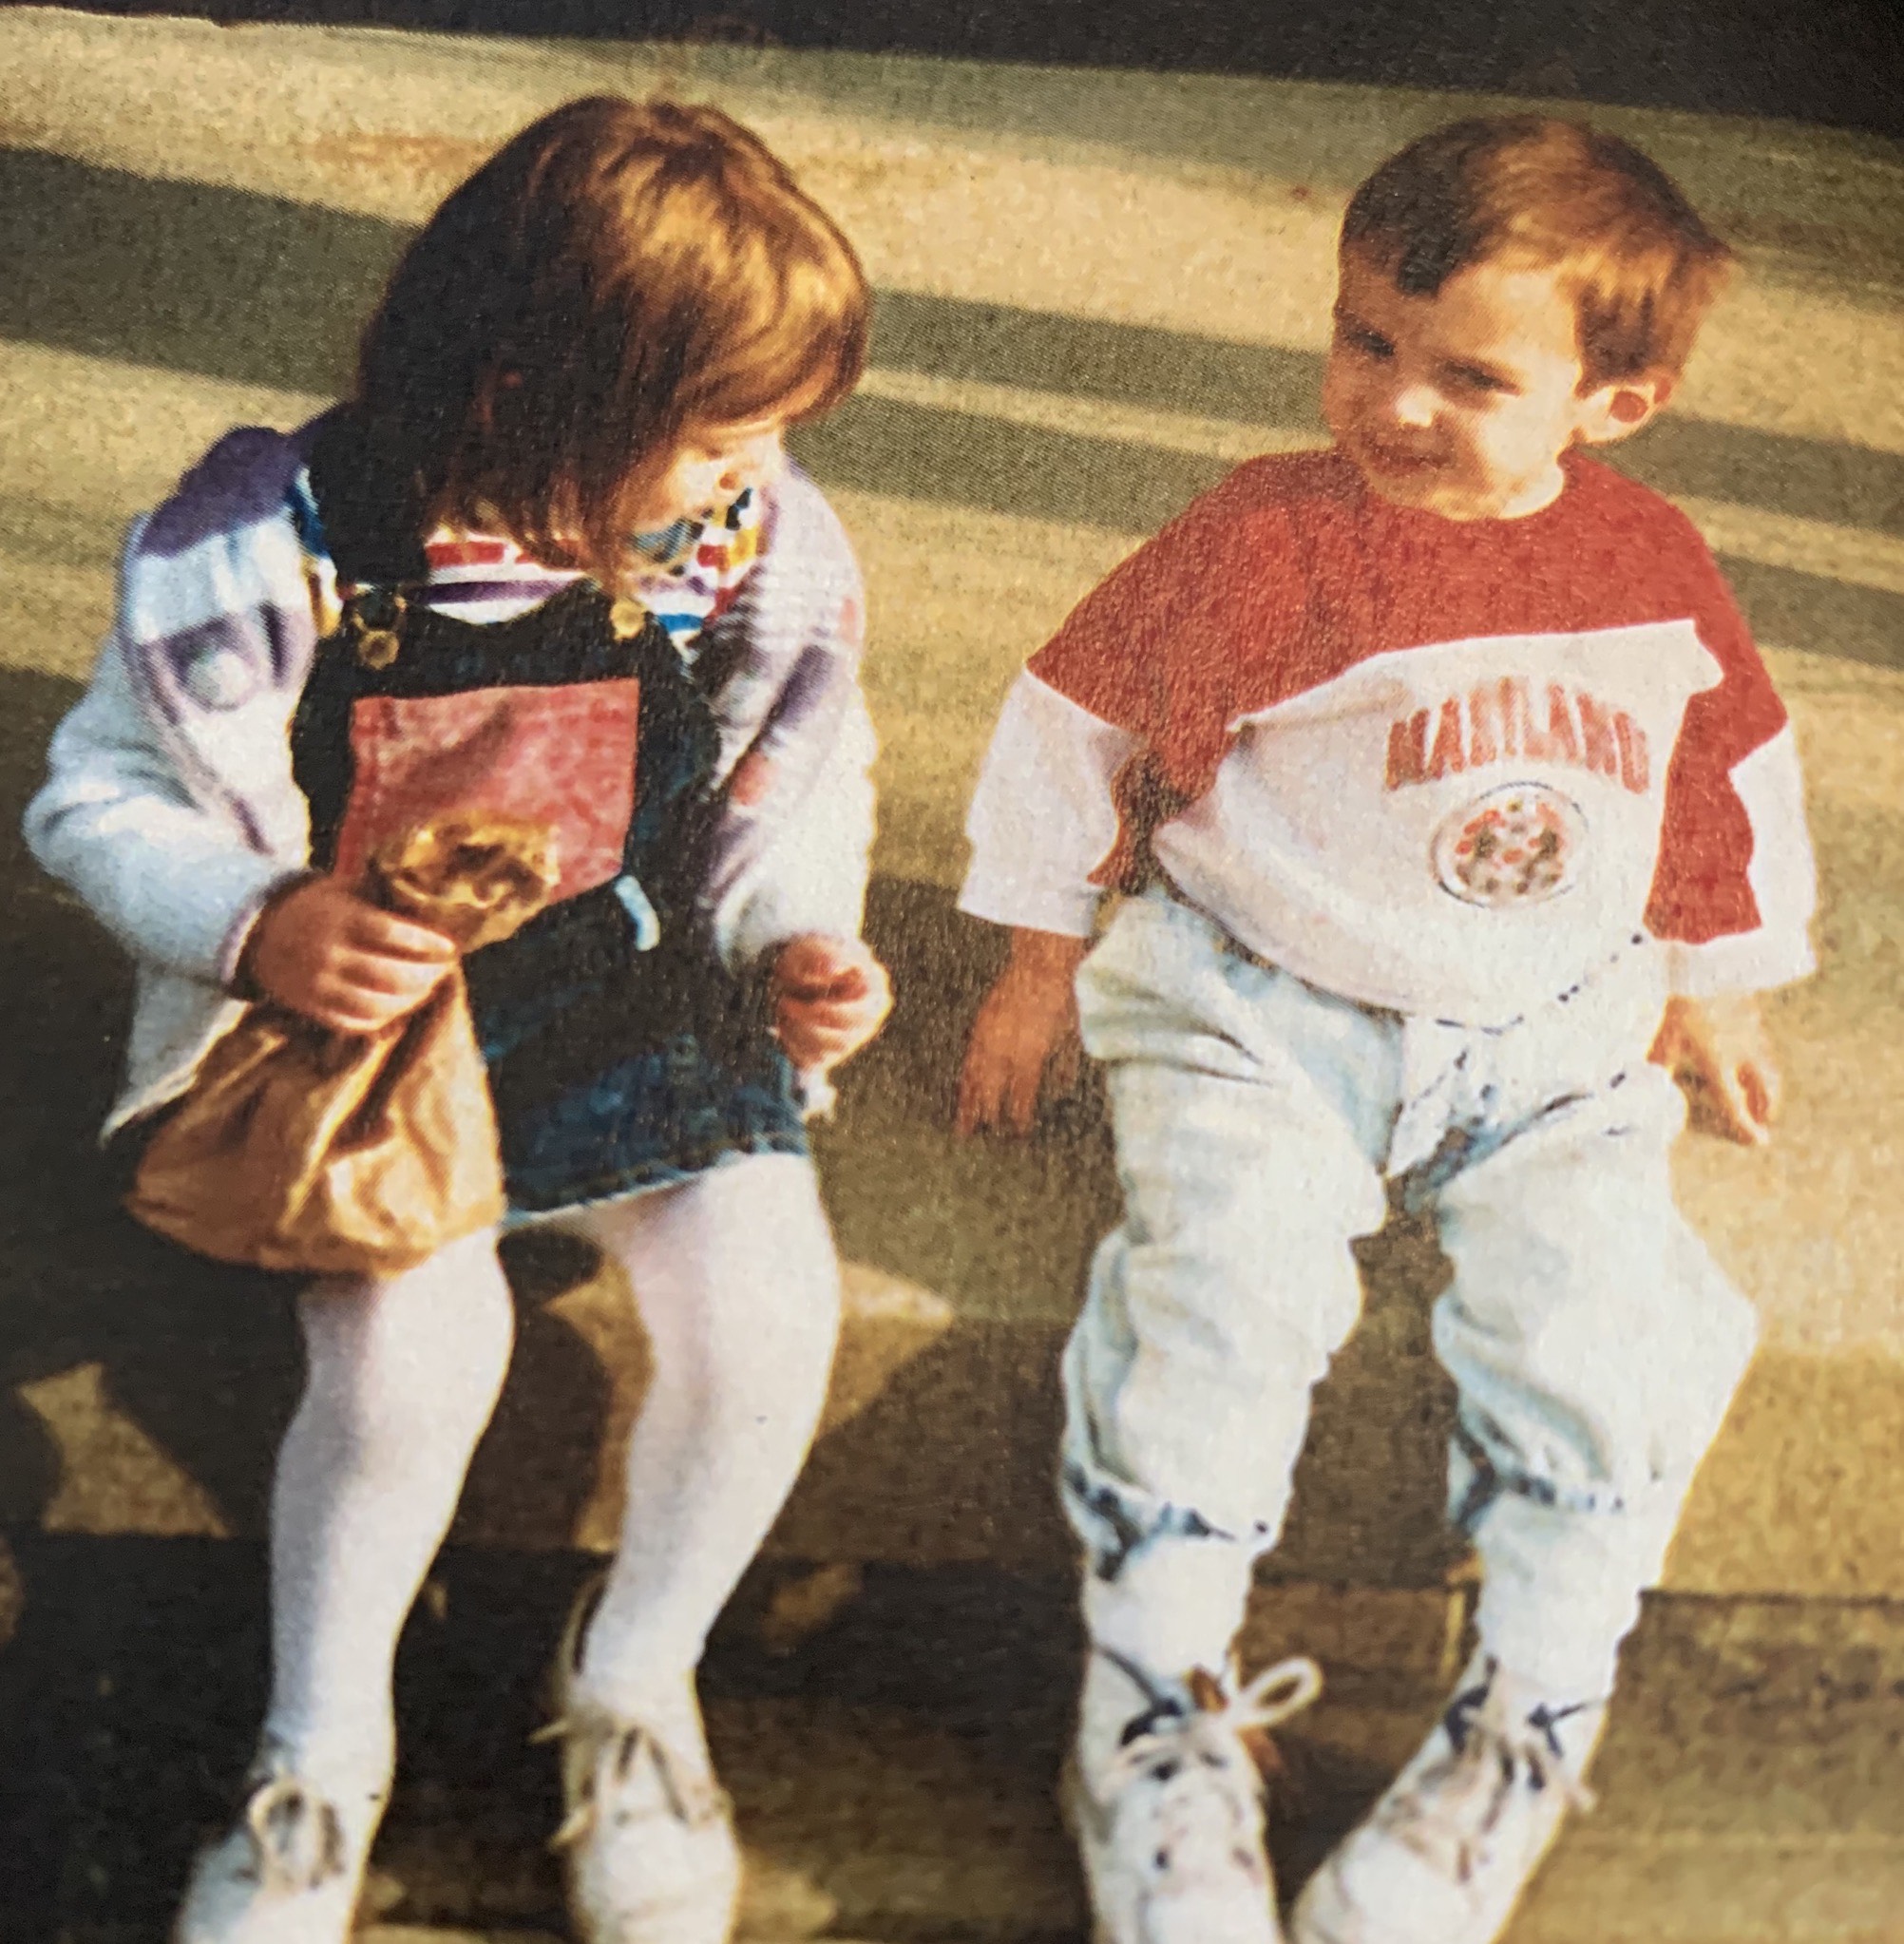 Stefanie and Jason Parks as children